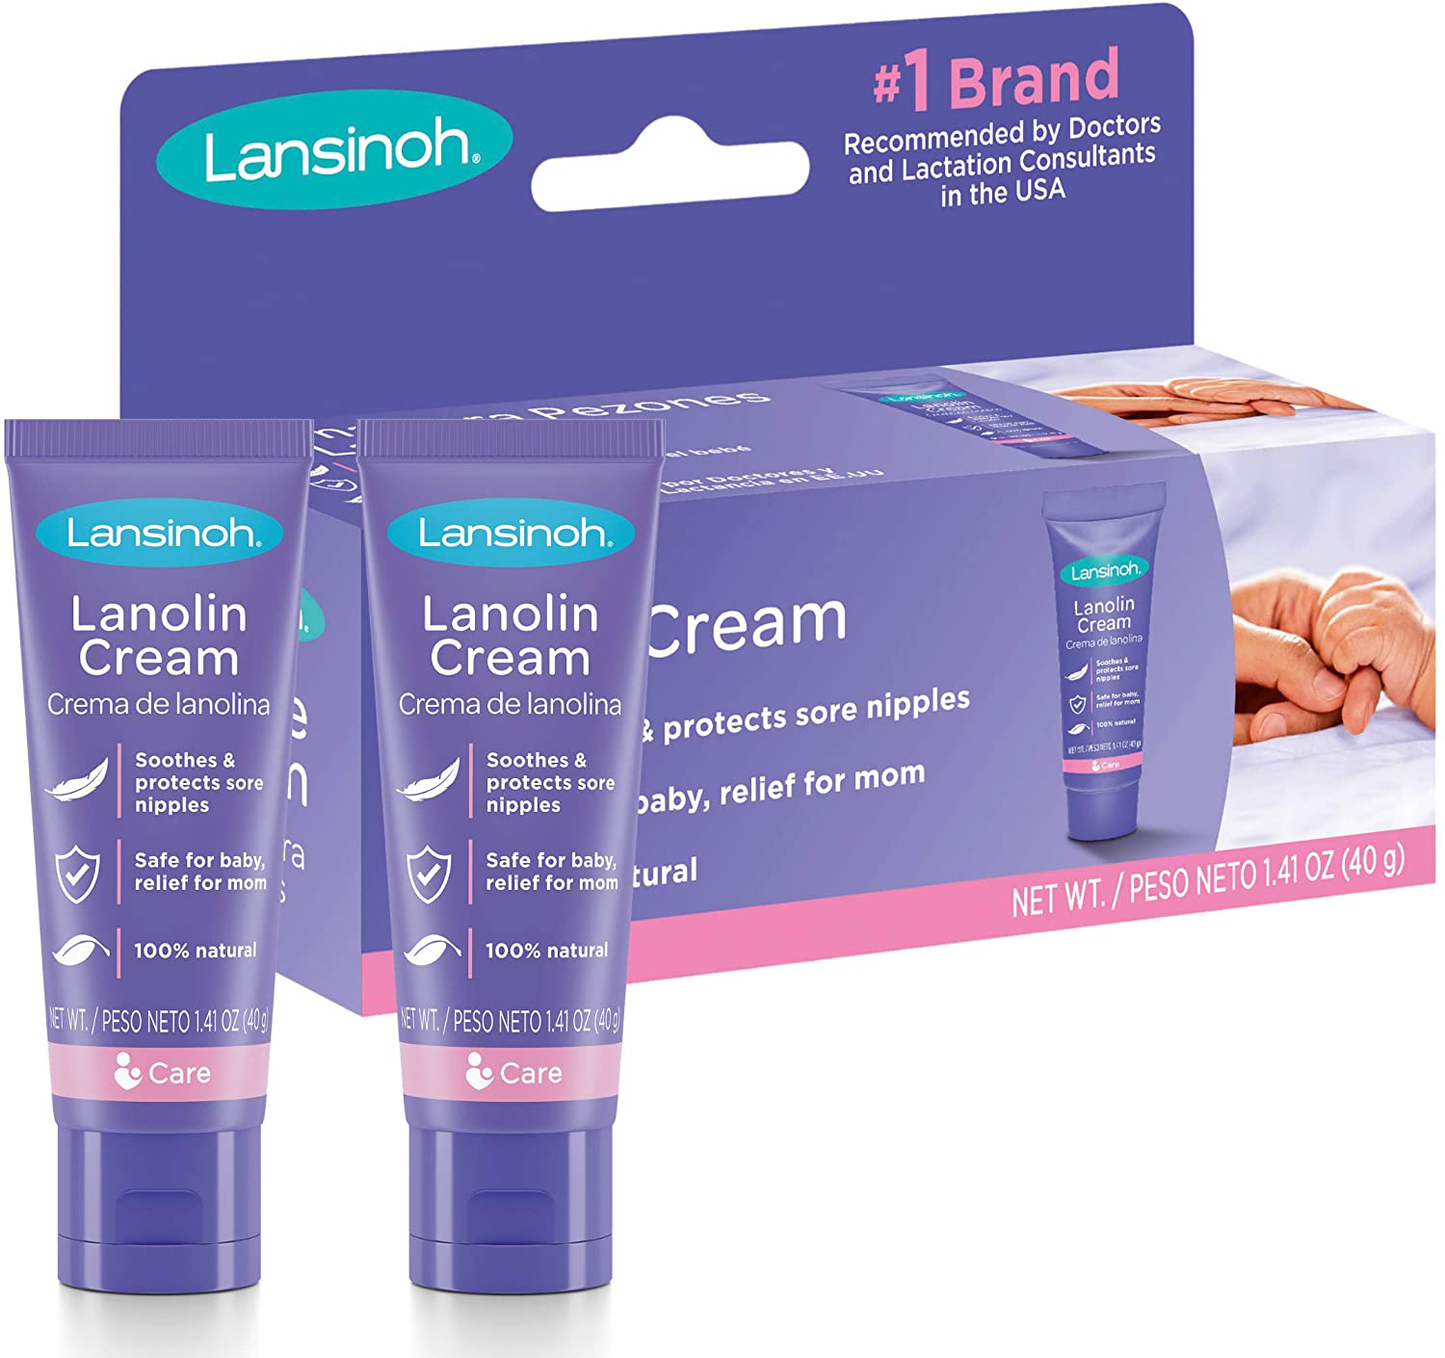 Lansinoh Lanolin Nipple Cream for Breastfeeding, 1.41 Ounces